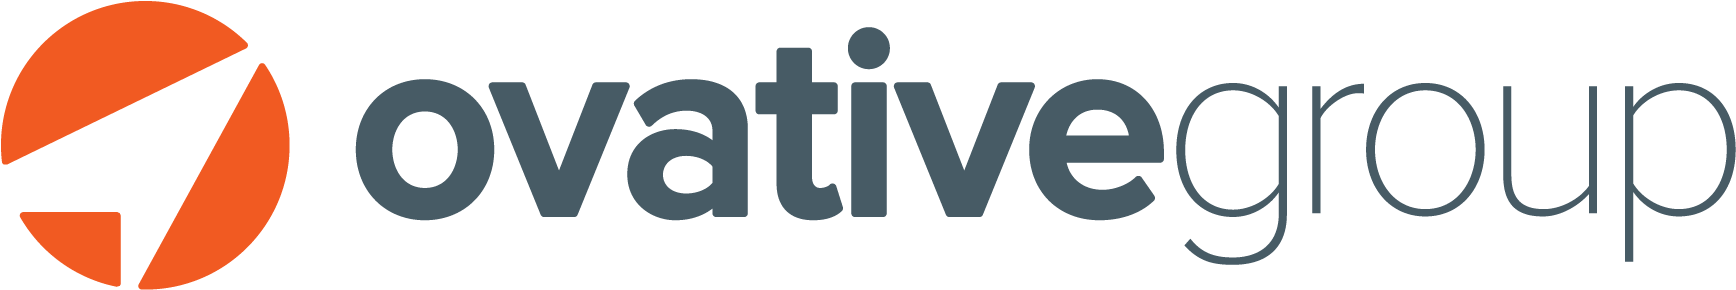 Ovative Group logo